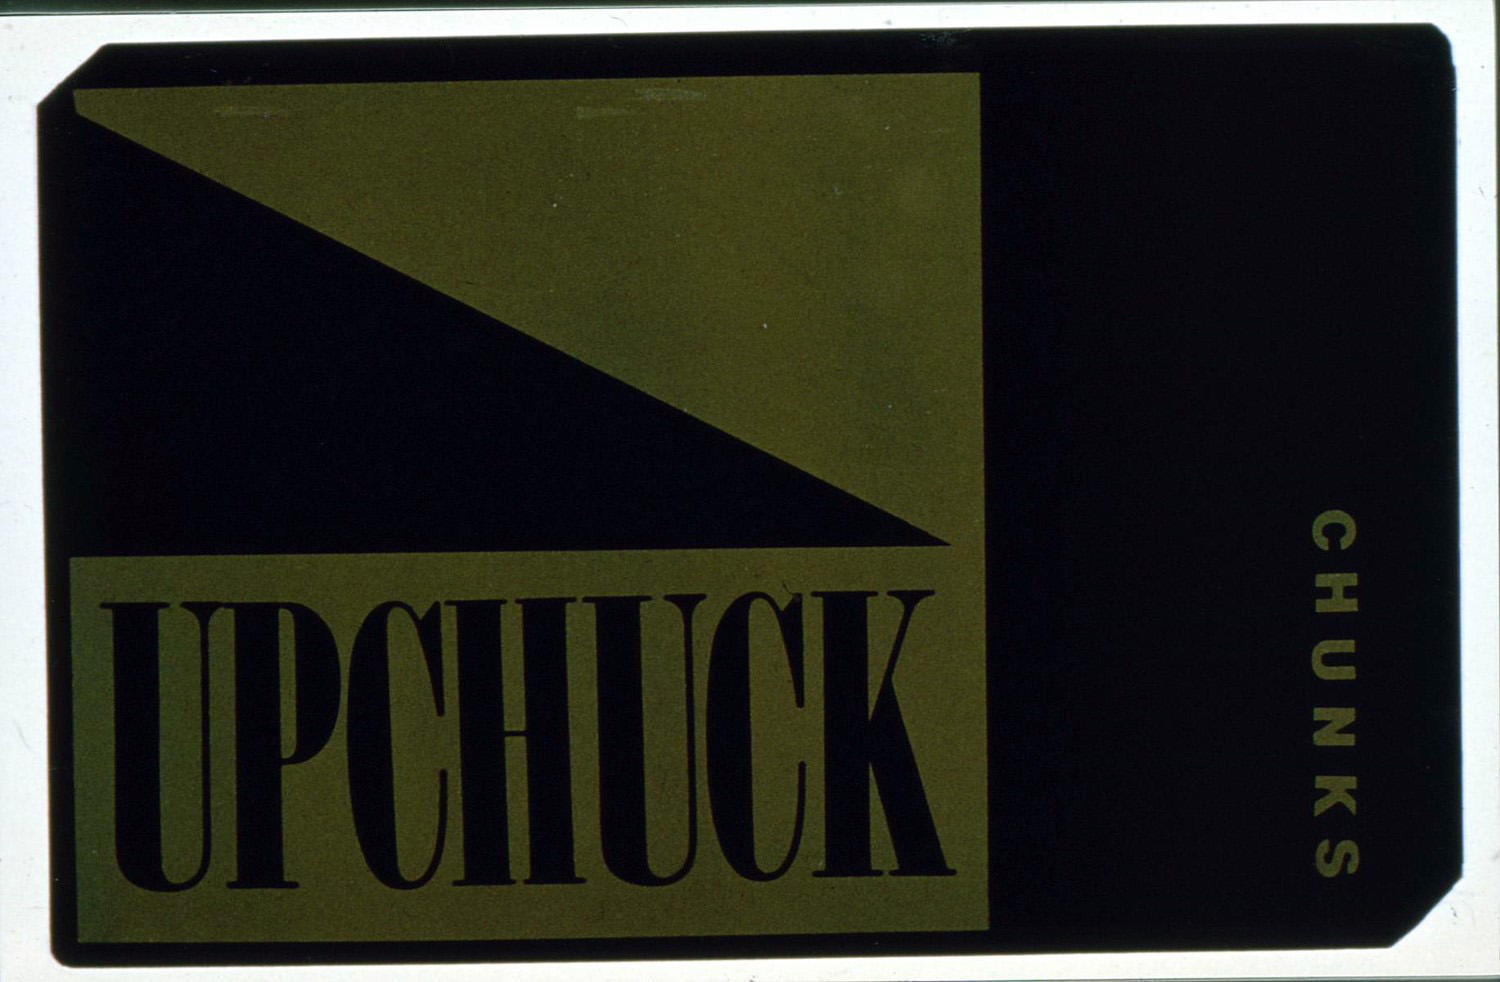 1989 Upchuck Chunks Pack